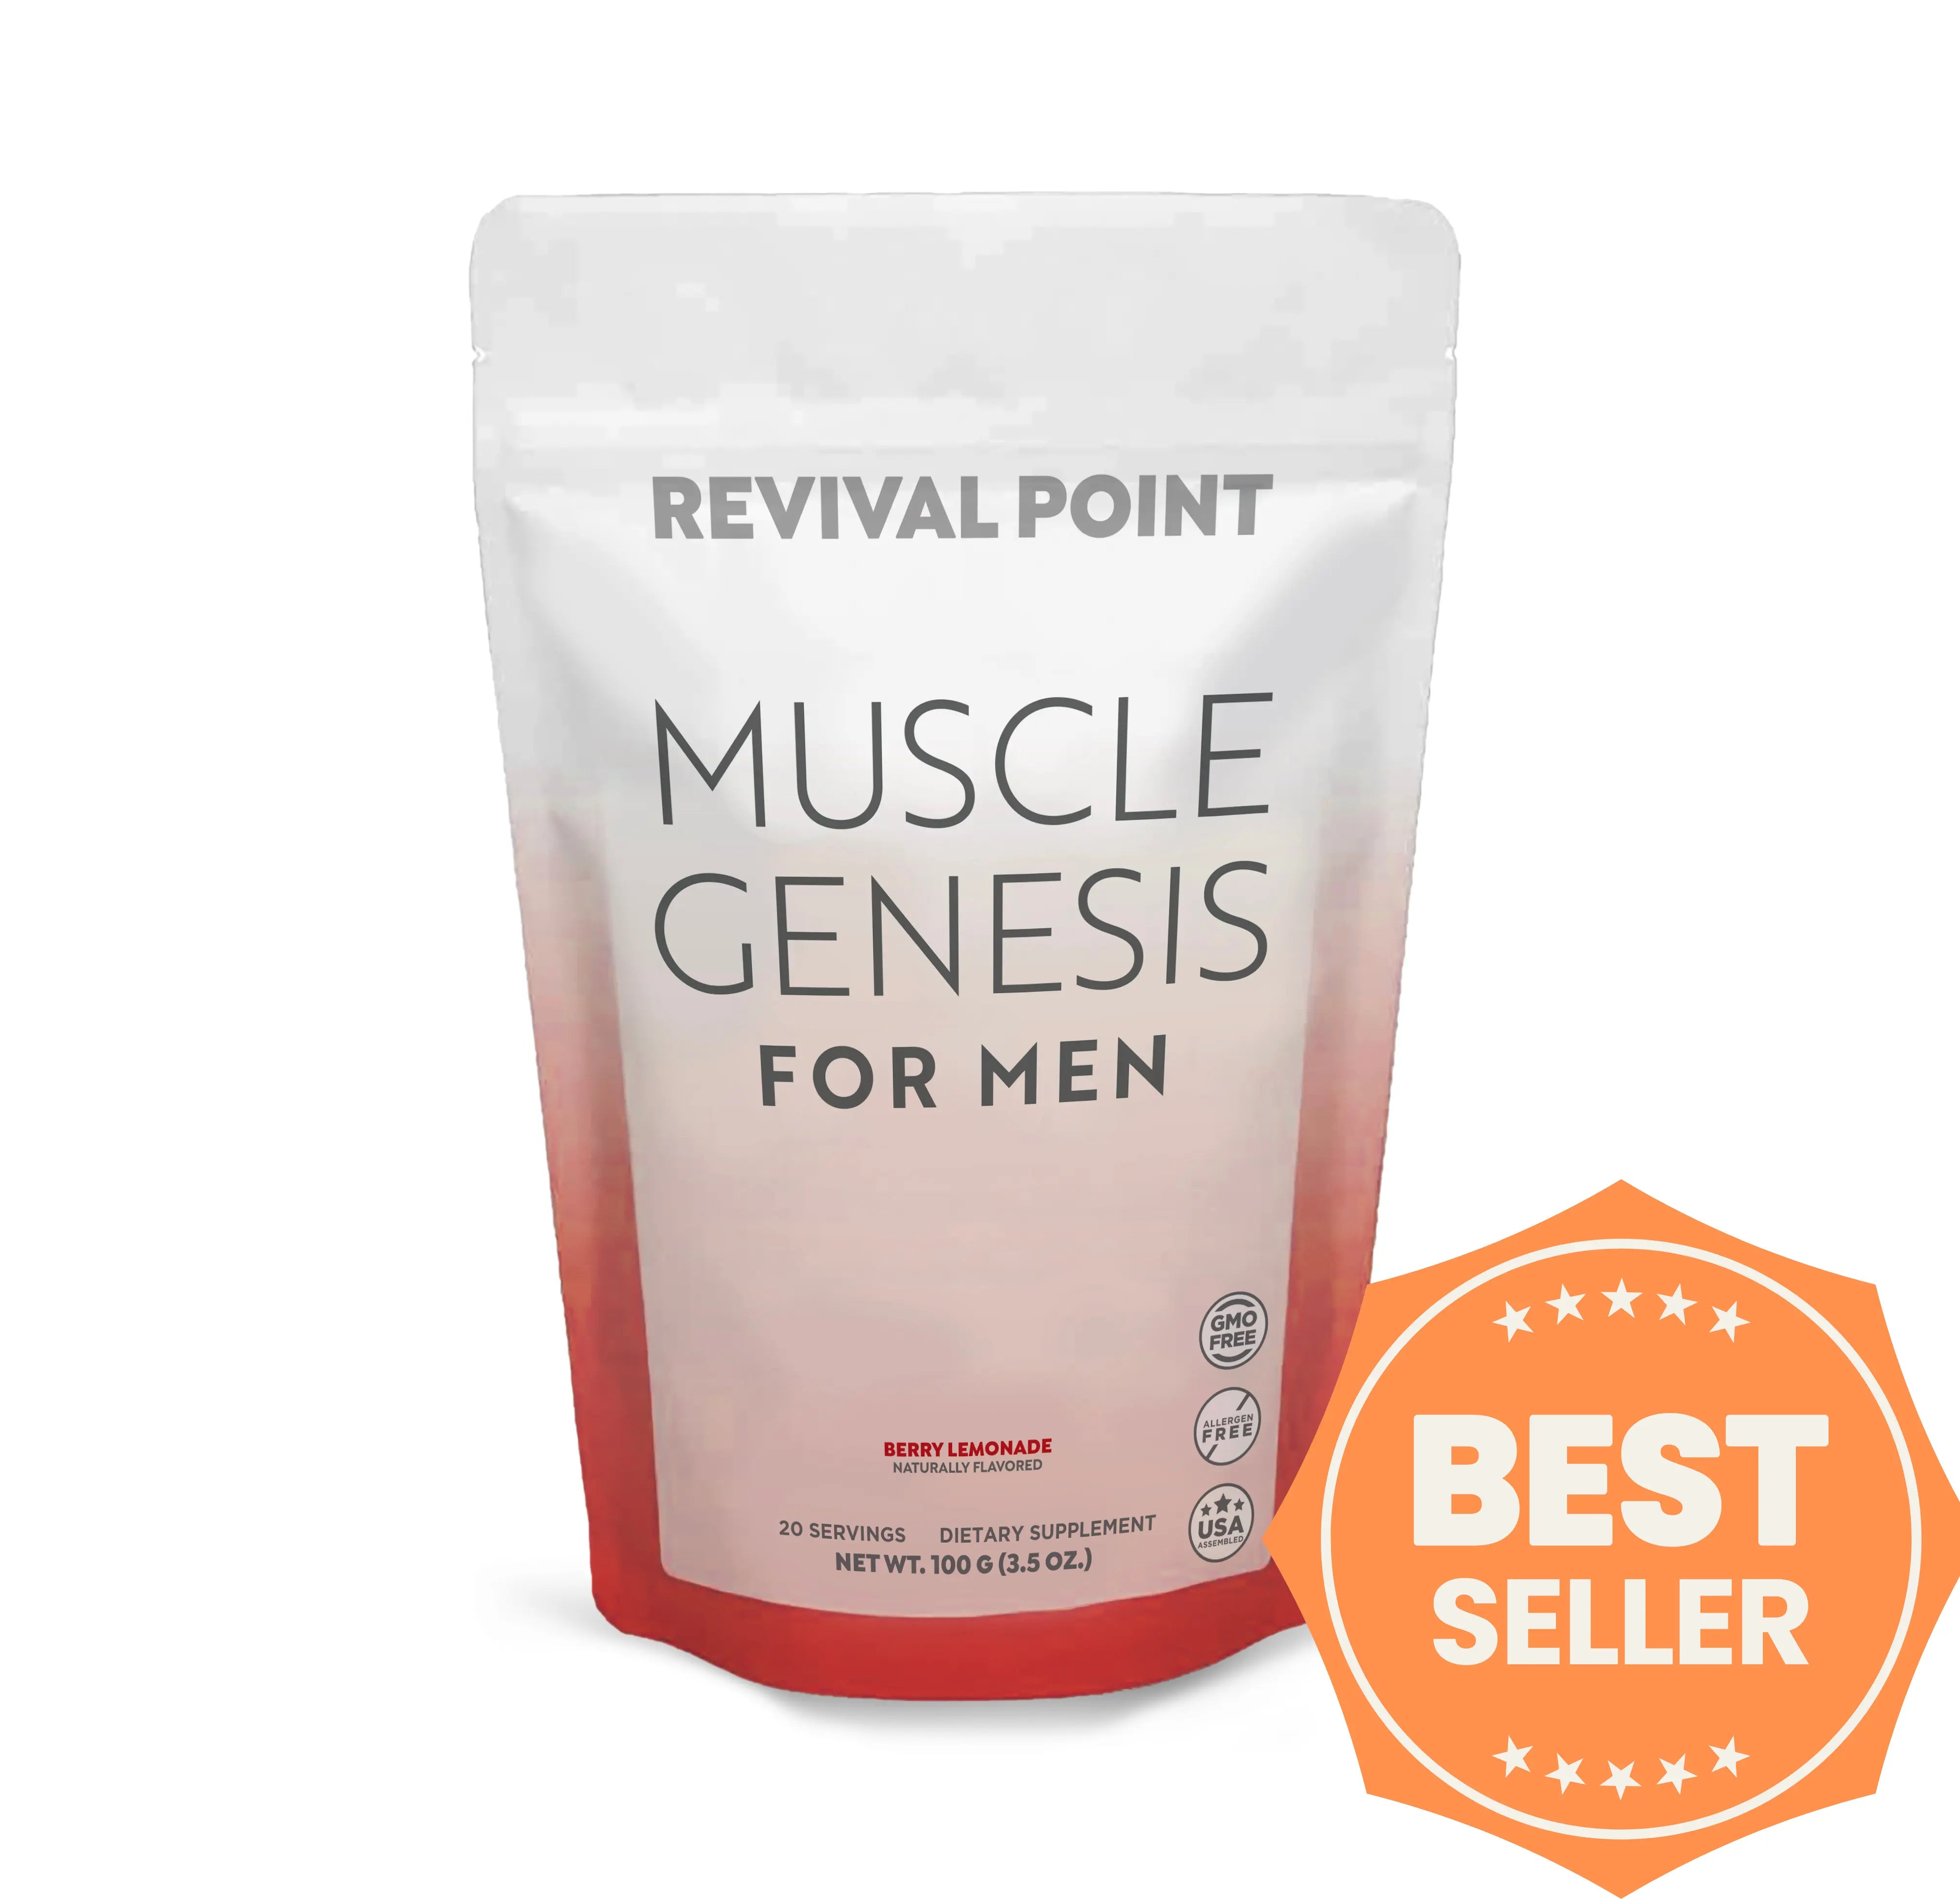 Muscle Genesis For Men HMB Supplement